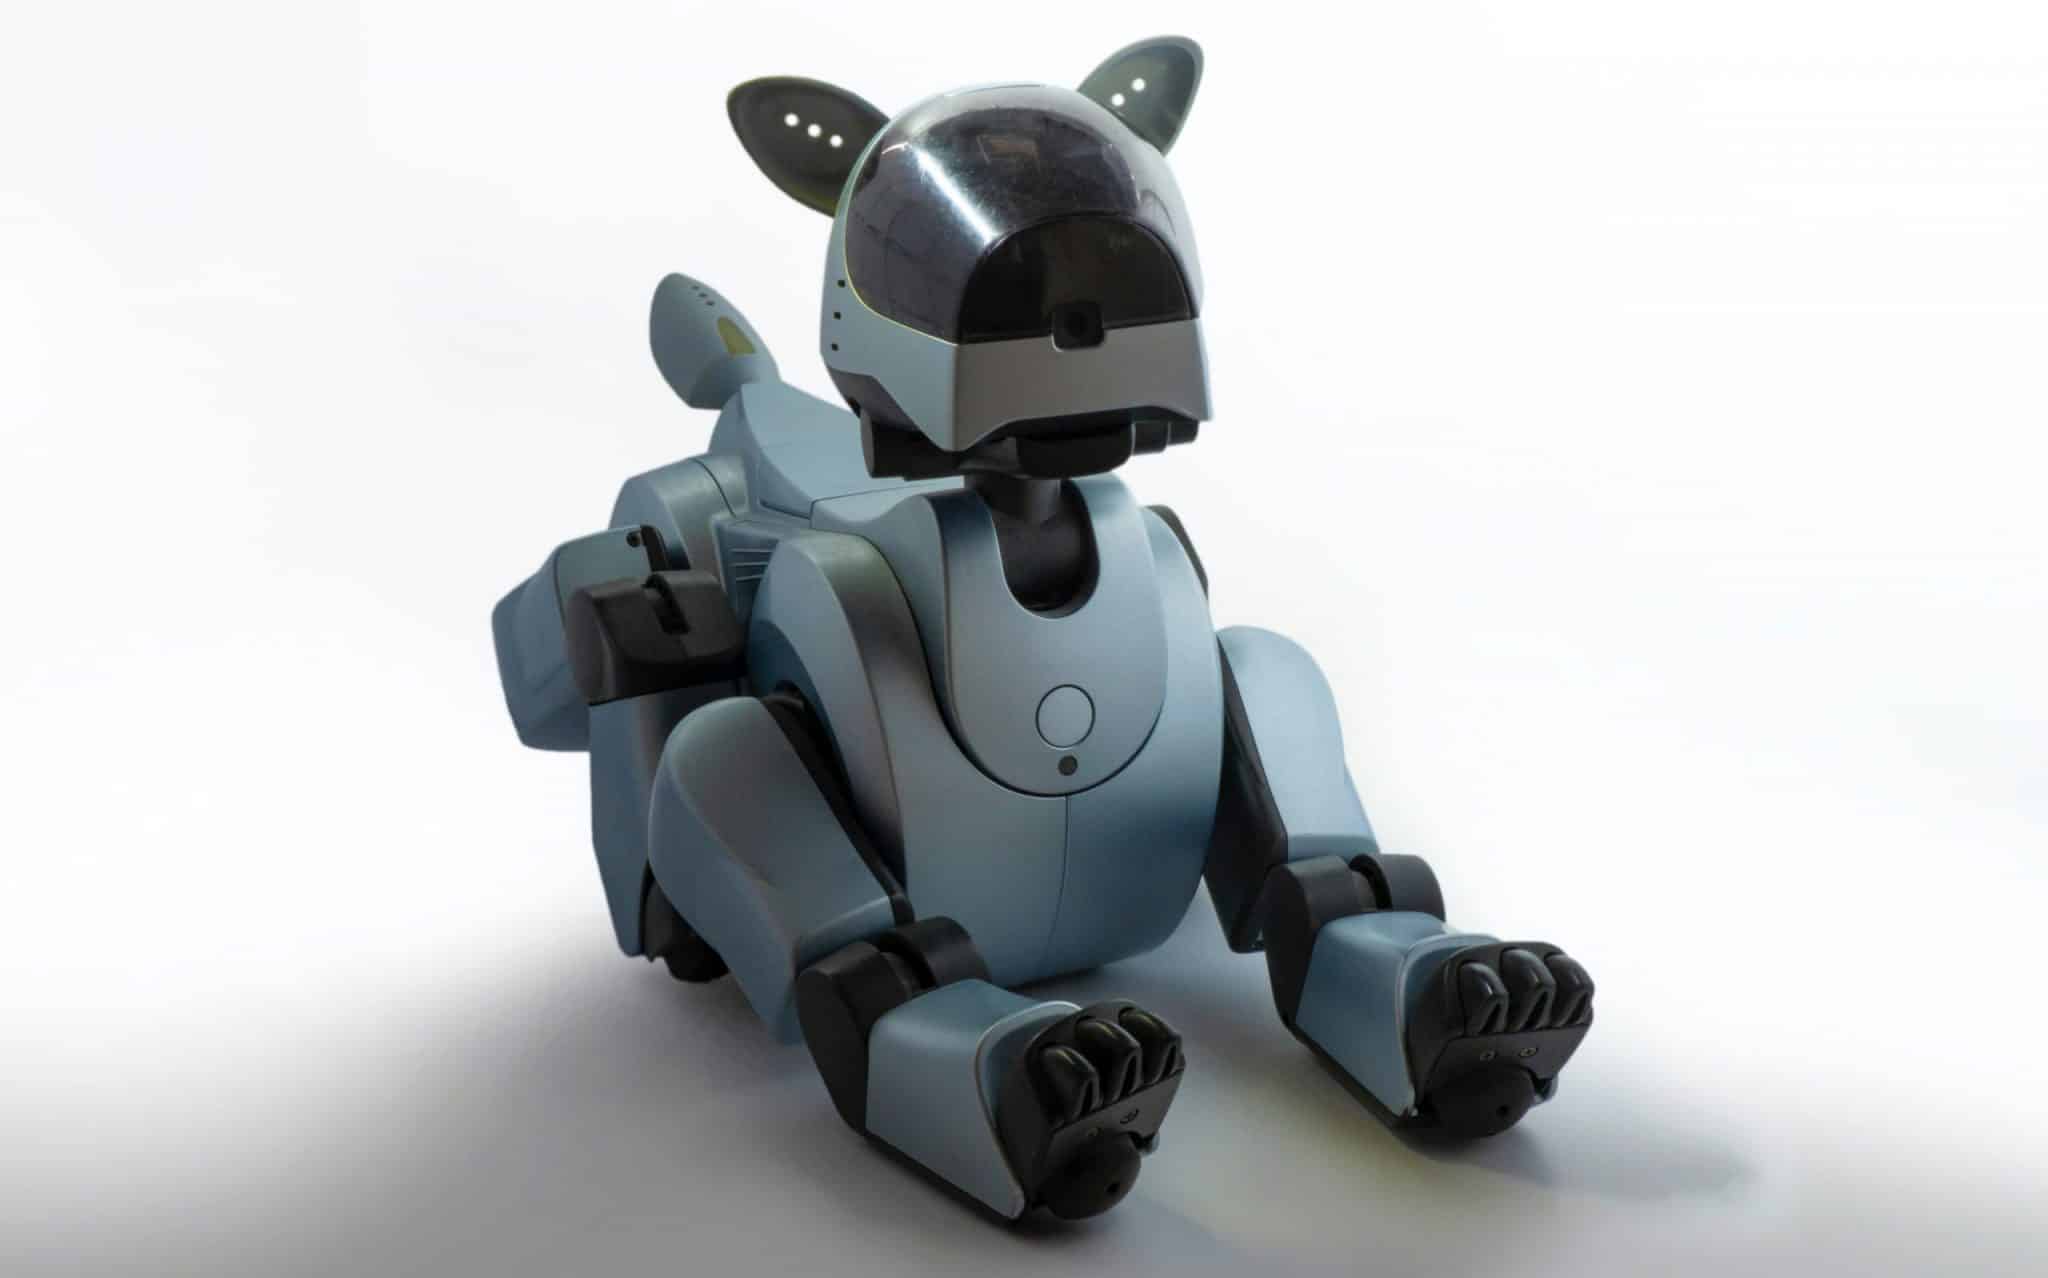 https://countryboardingkennels.co.uk/wp-content/uploads/2023/02/robot-dog-1-scaled.jpg